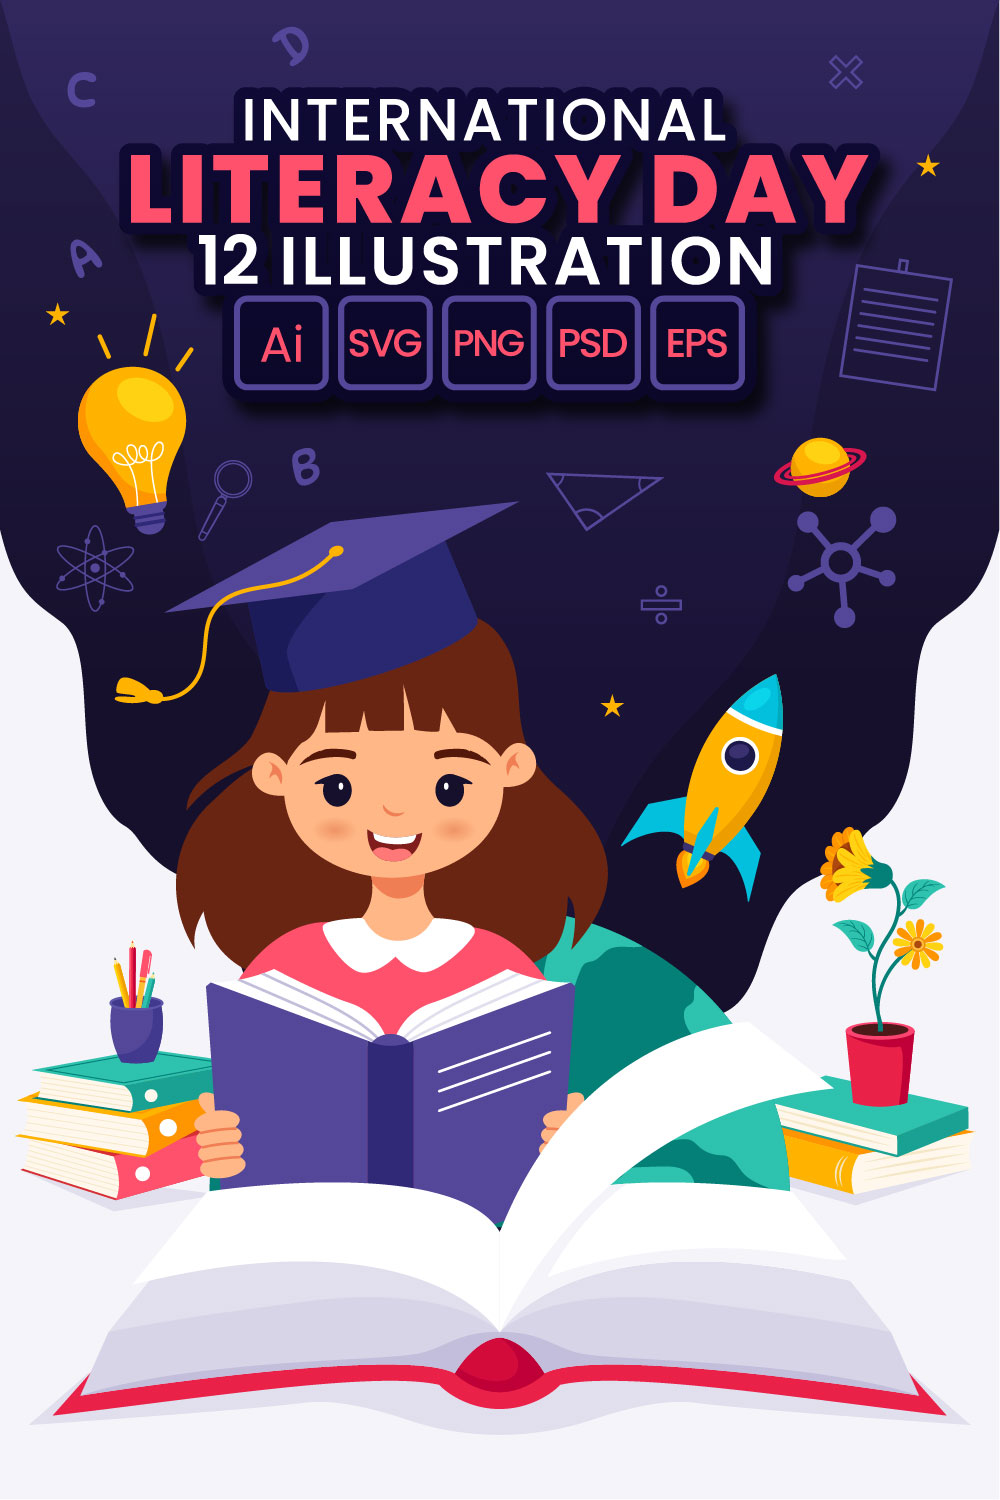 12 International Literacy Day Illustration pinterest preview image.